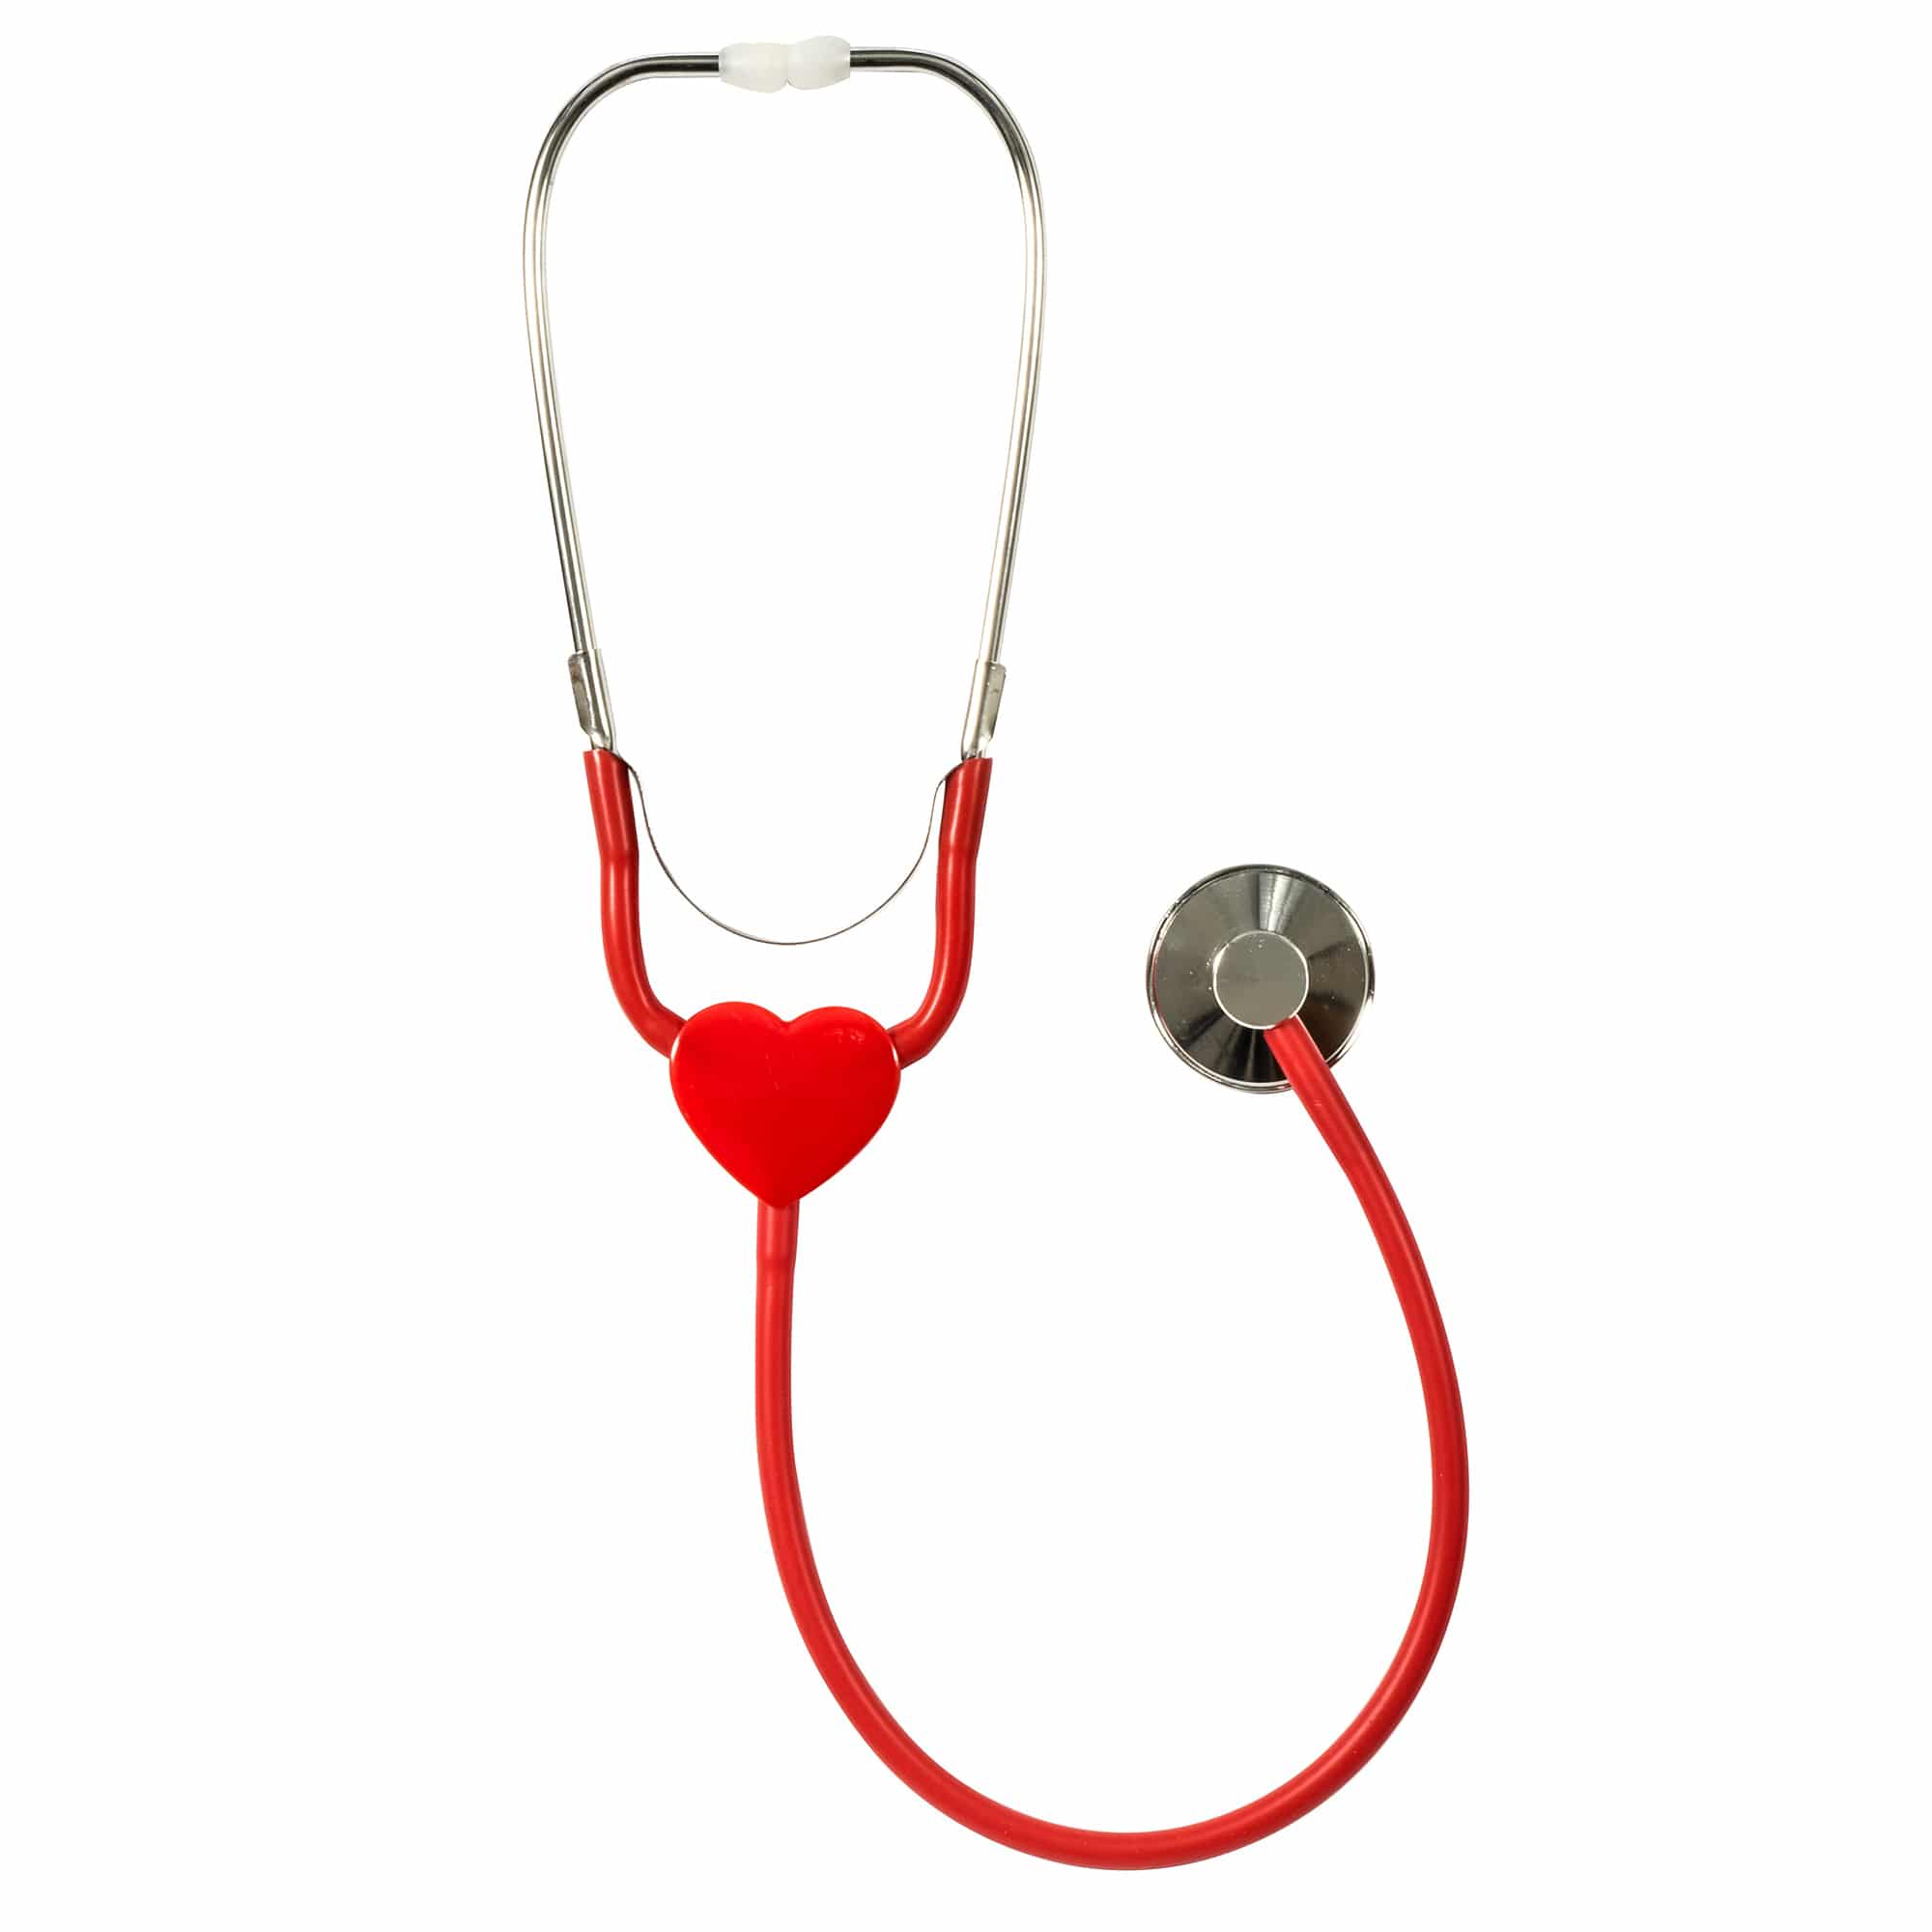 https://schylling.com/wp-content/uploads/2020/08/LDSS-Little-Doctor-Stethoscope-web.jpg